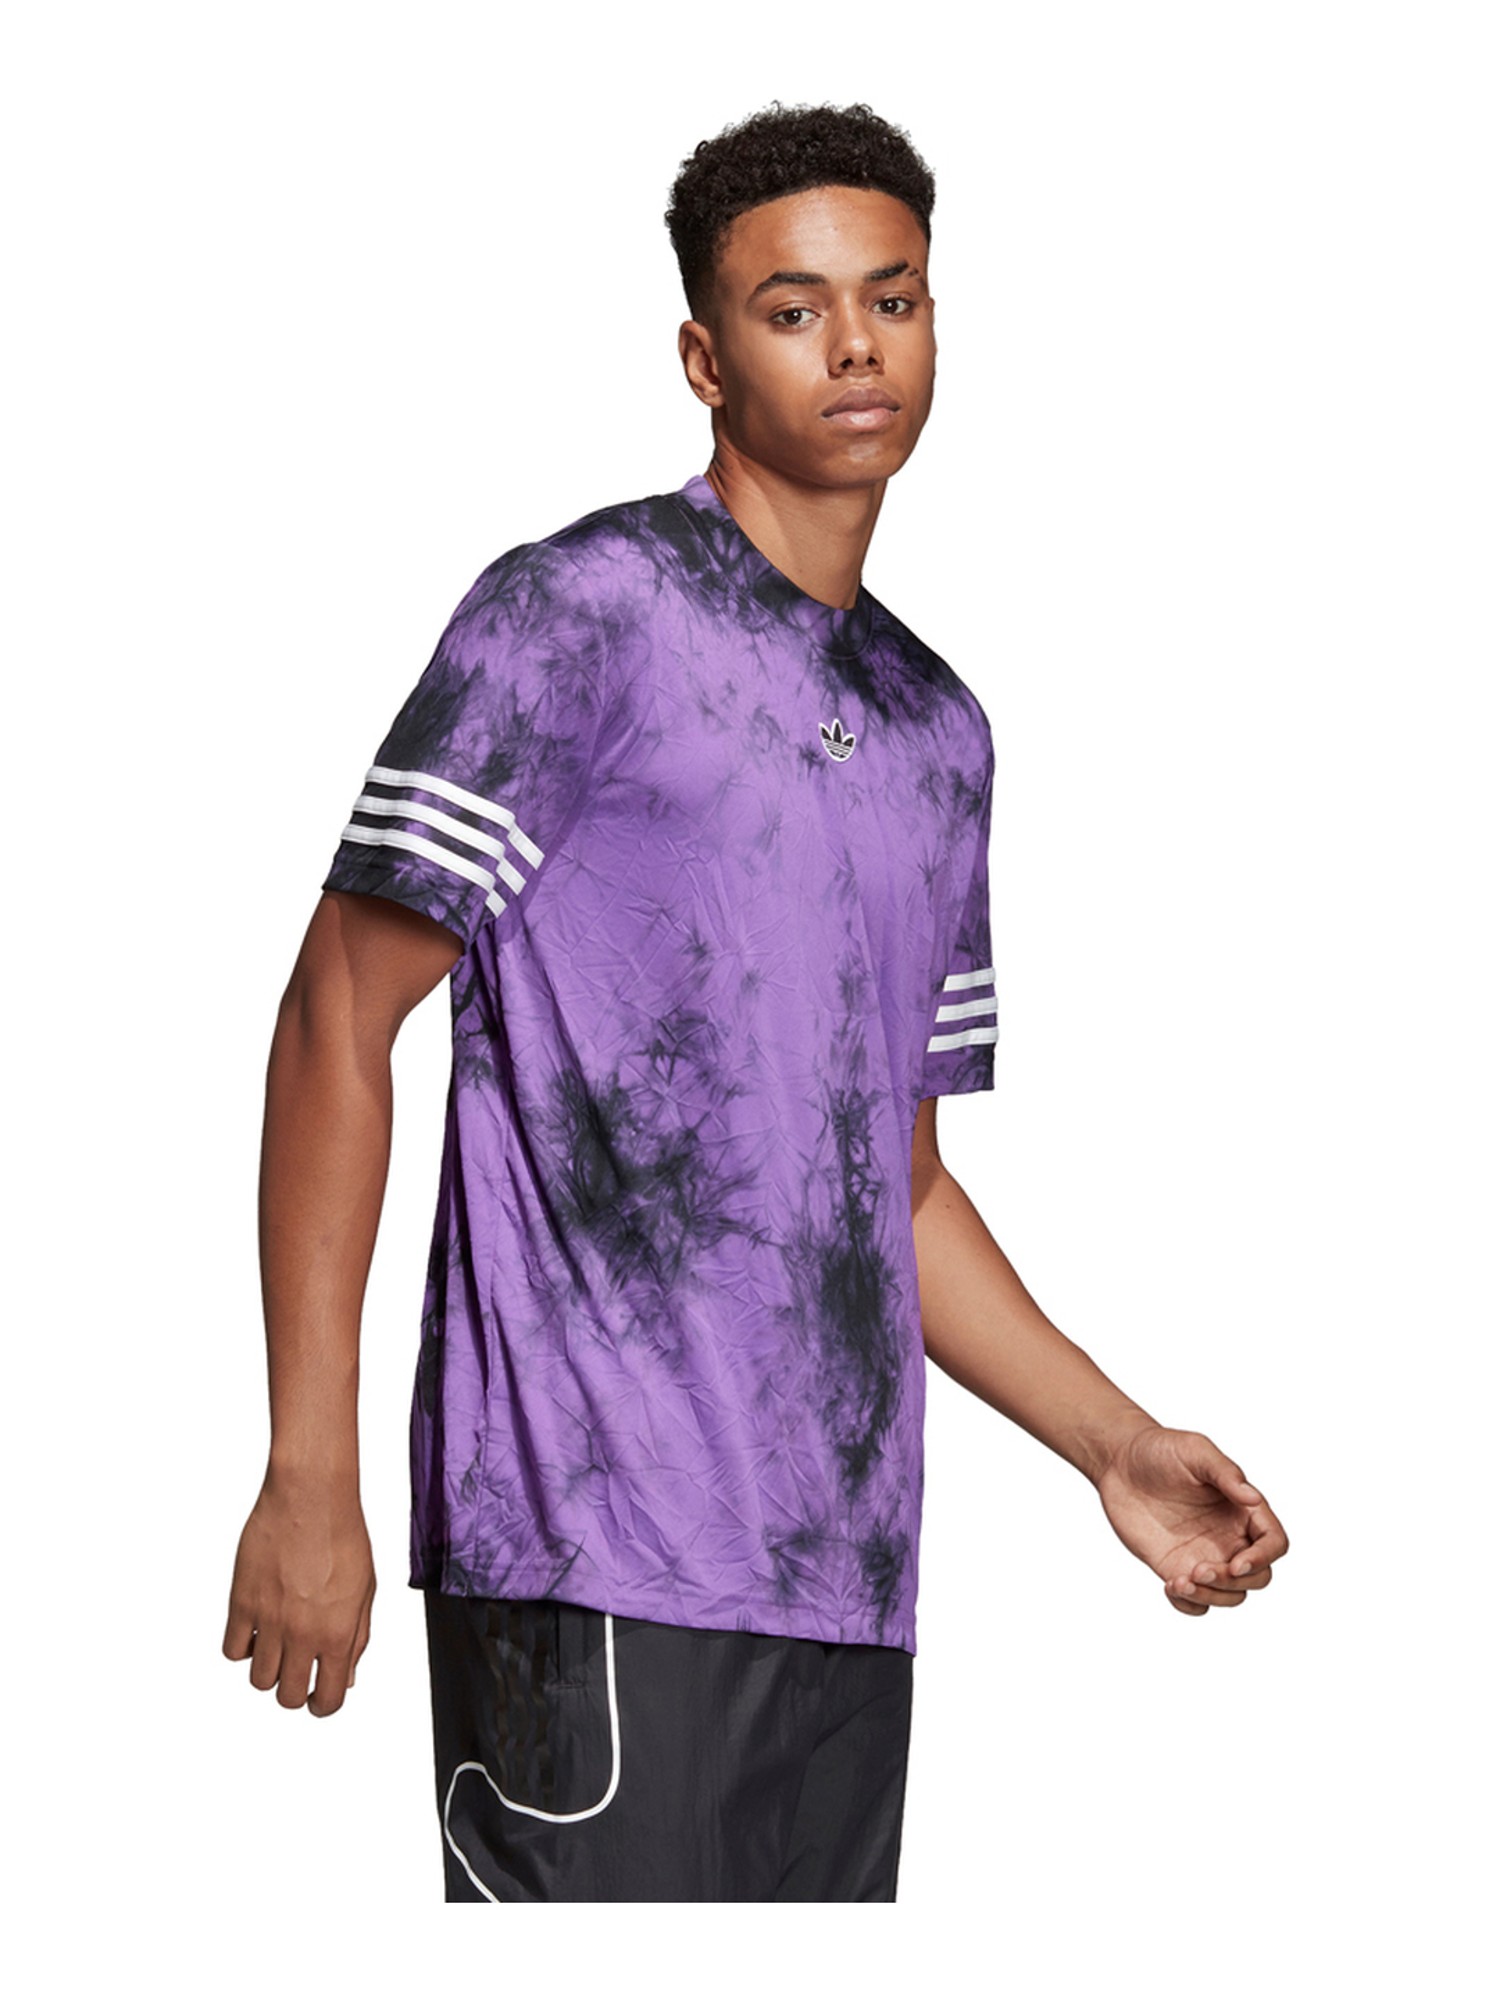 adidas jersey purple